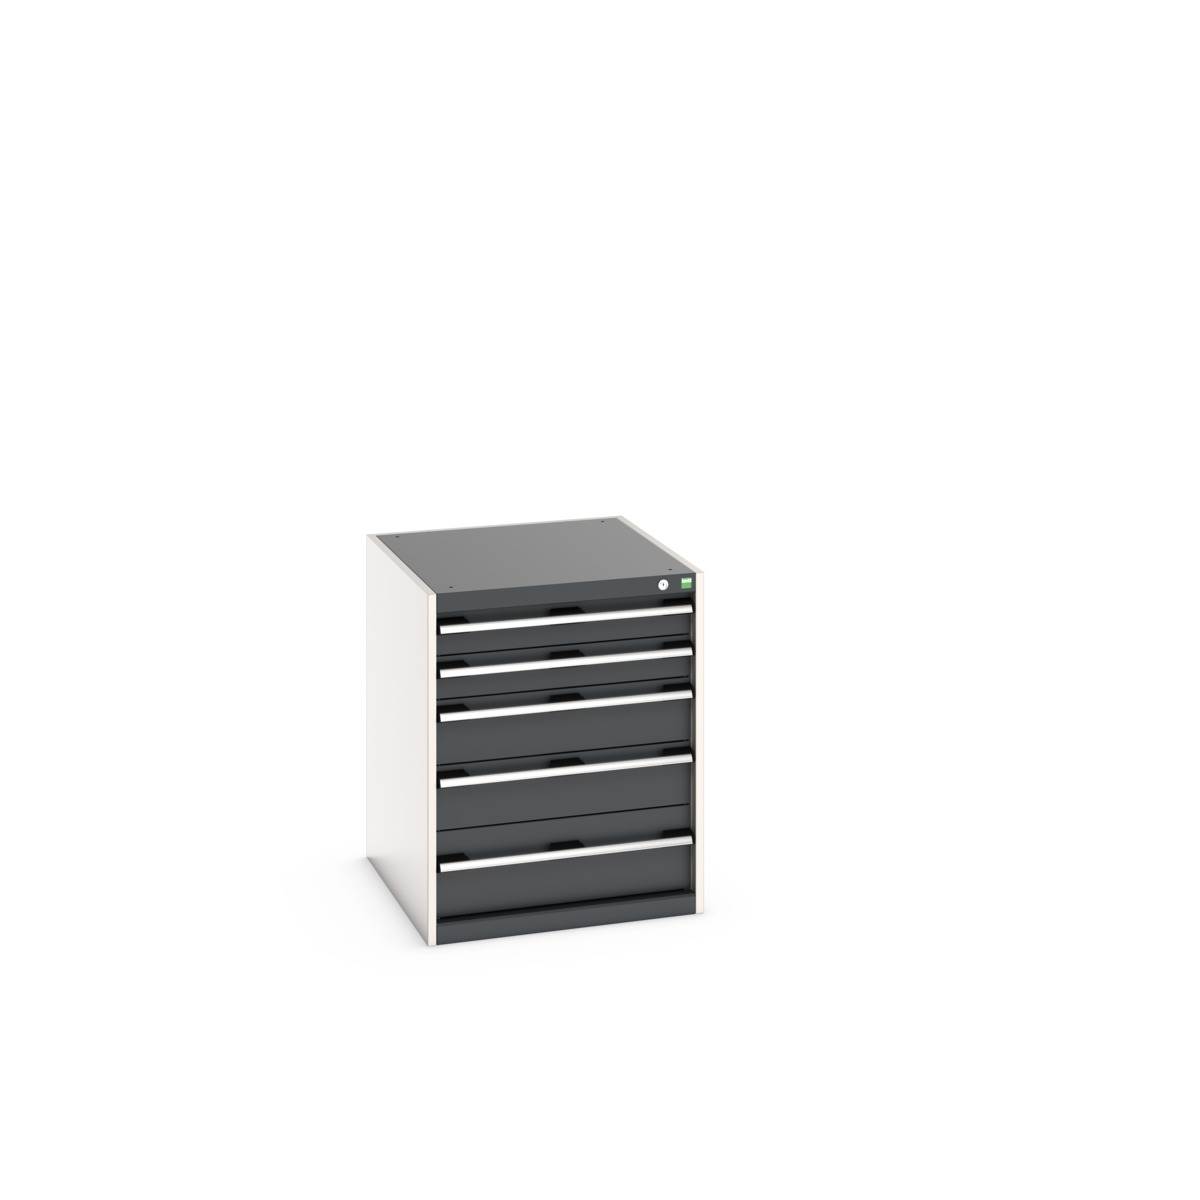 40027015. - cubio drawer cabinet